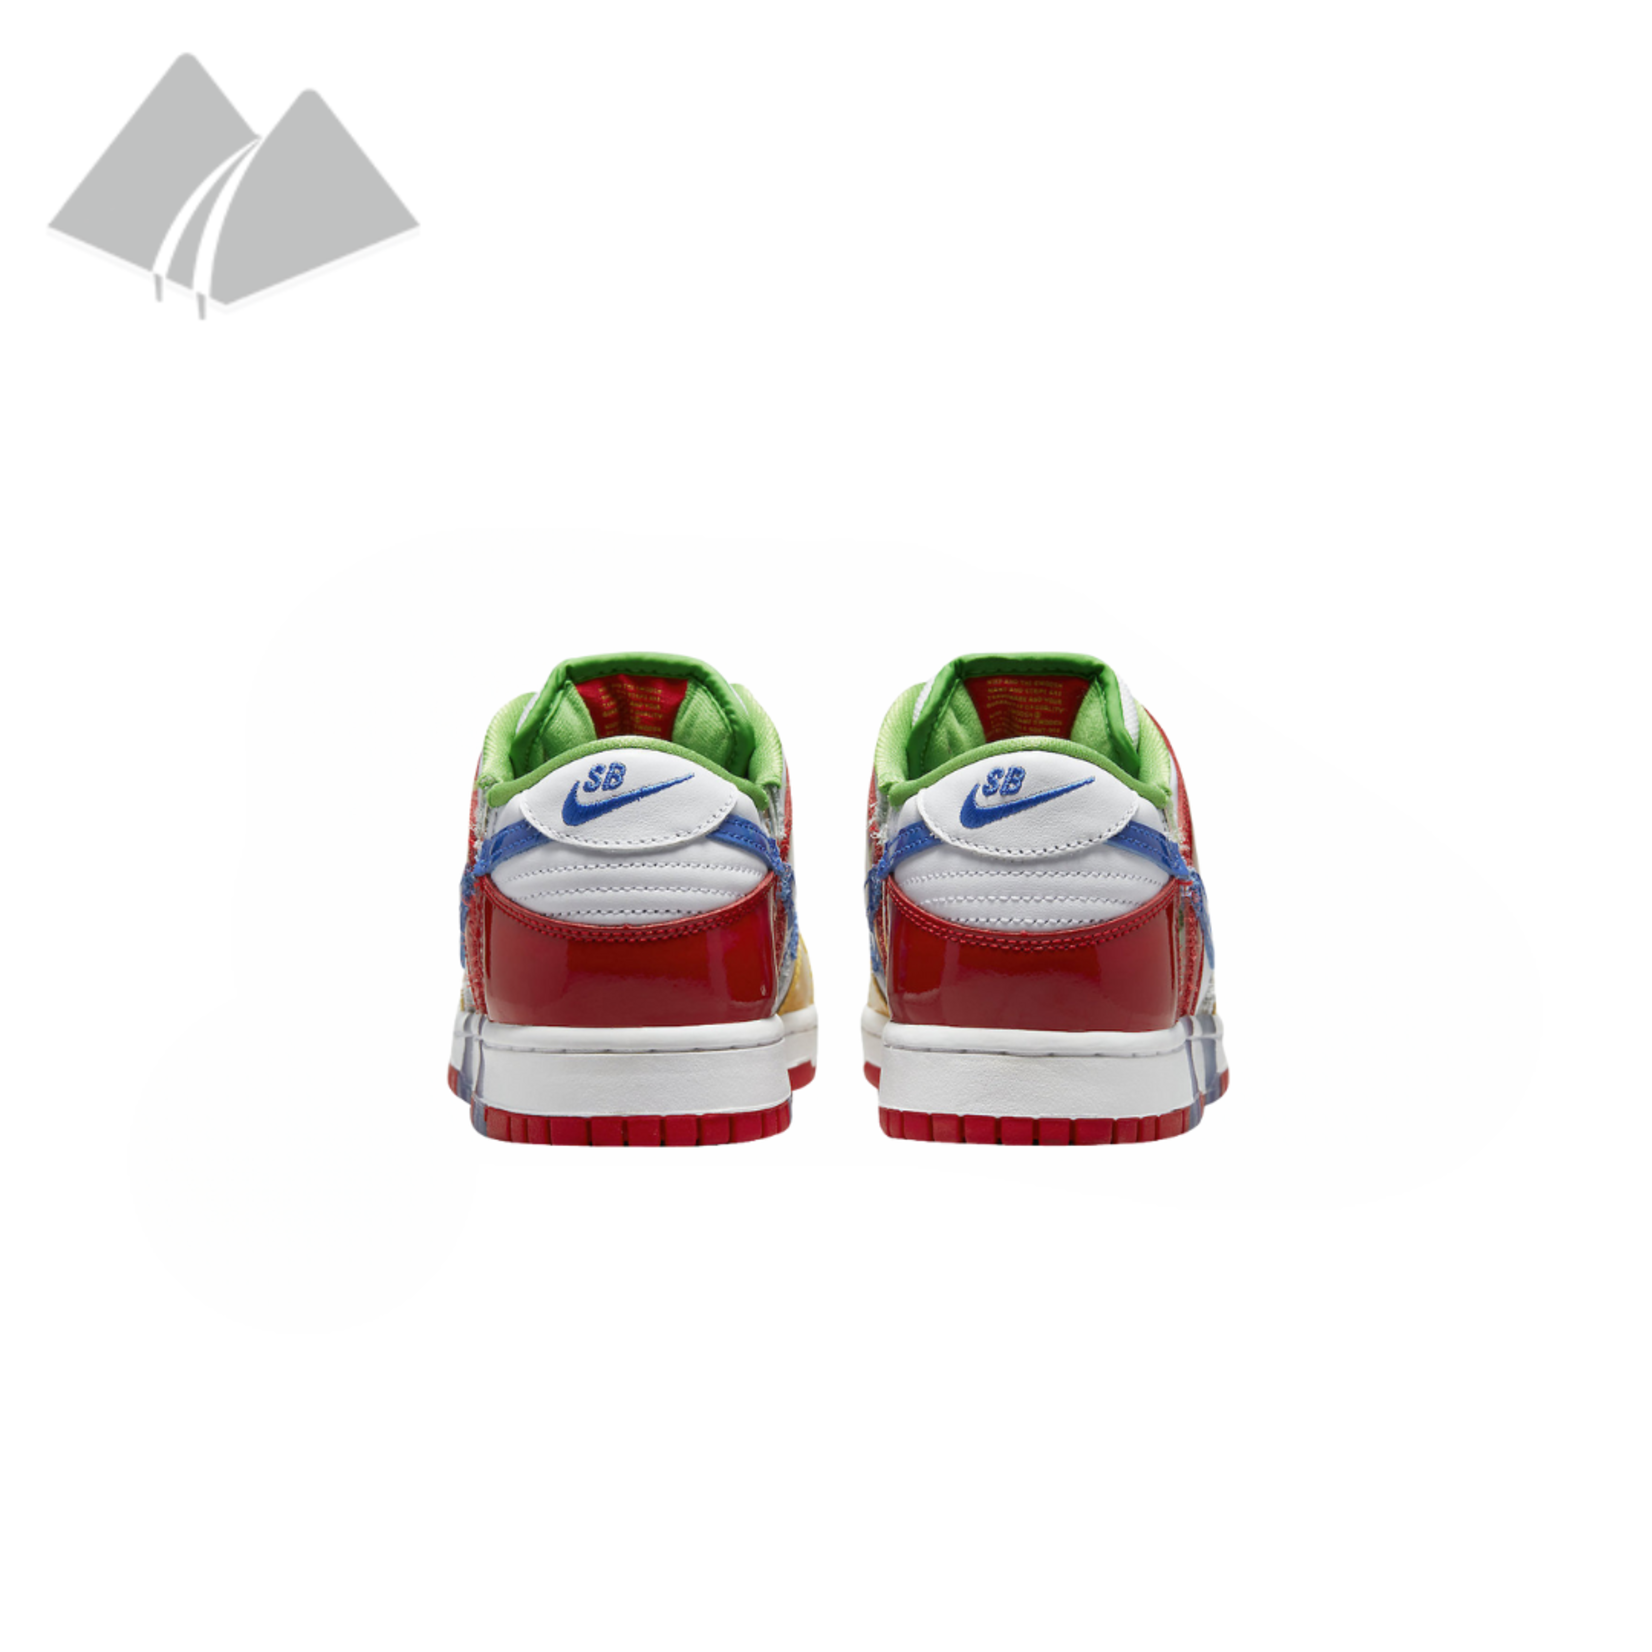 Nike Nike SB Dunk Low (M) Ebay Sandy Bodecker